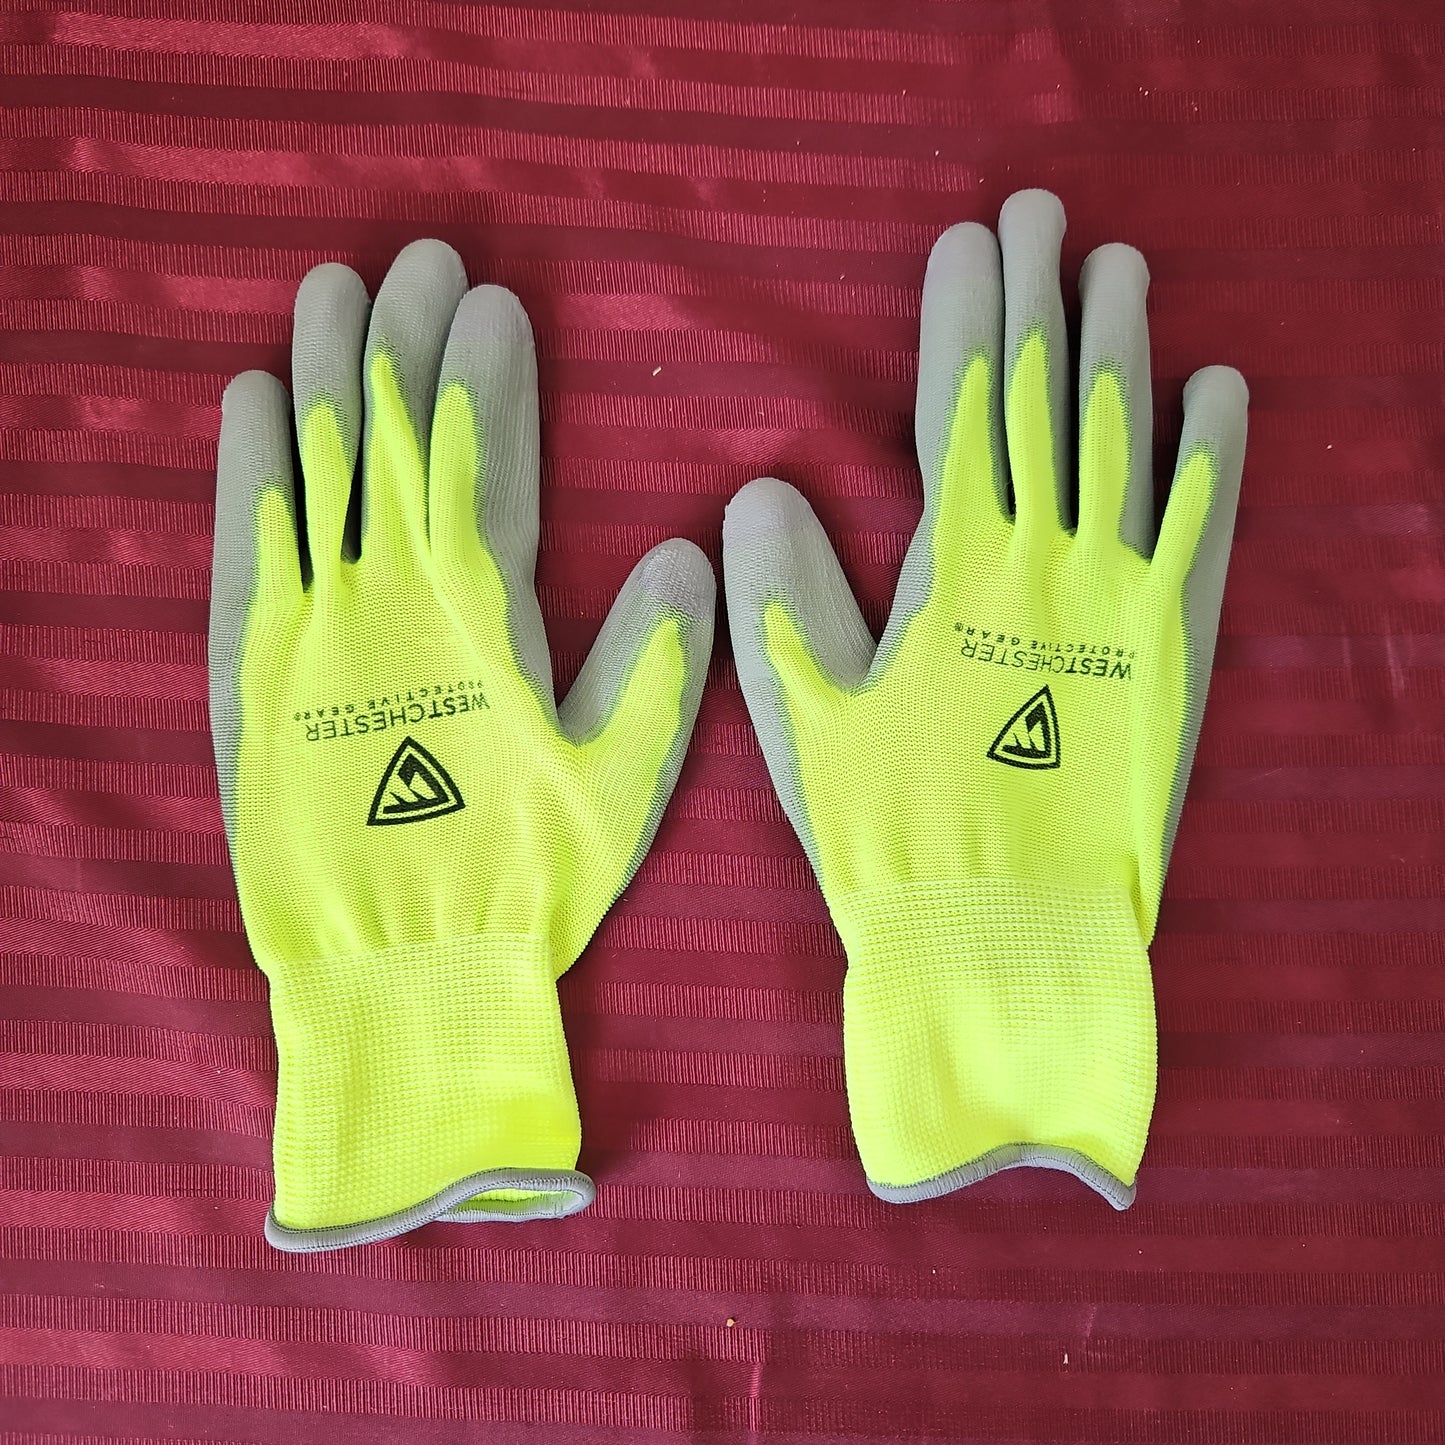 Par de guantes de trabajo de poliuretano (Talla L) - West Chester (Nuevo)